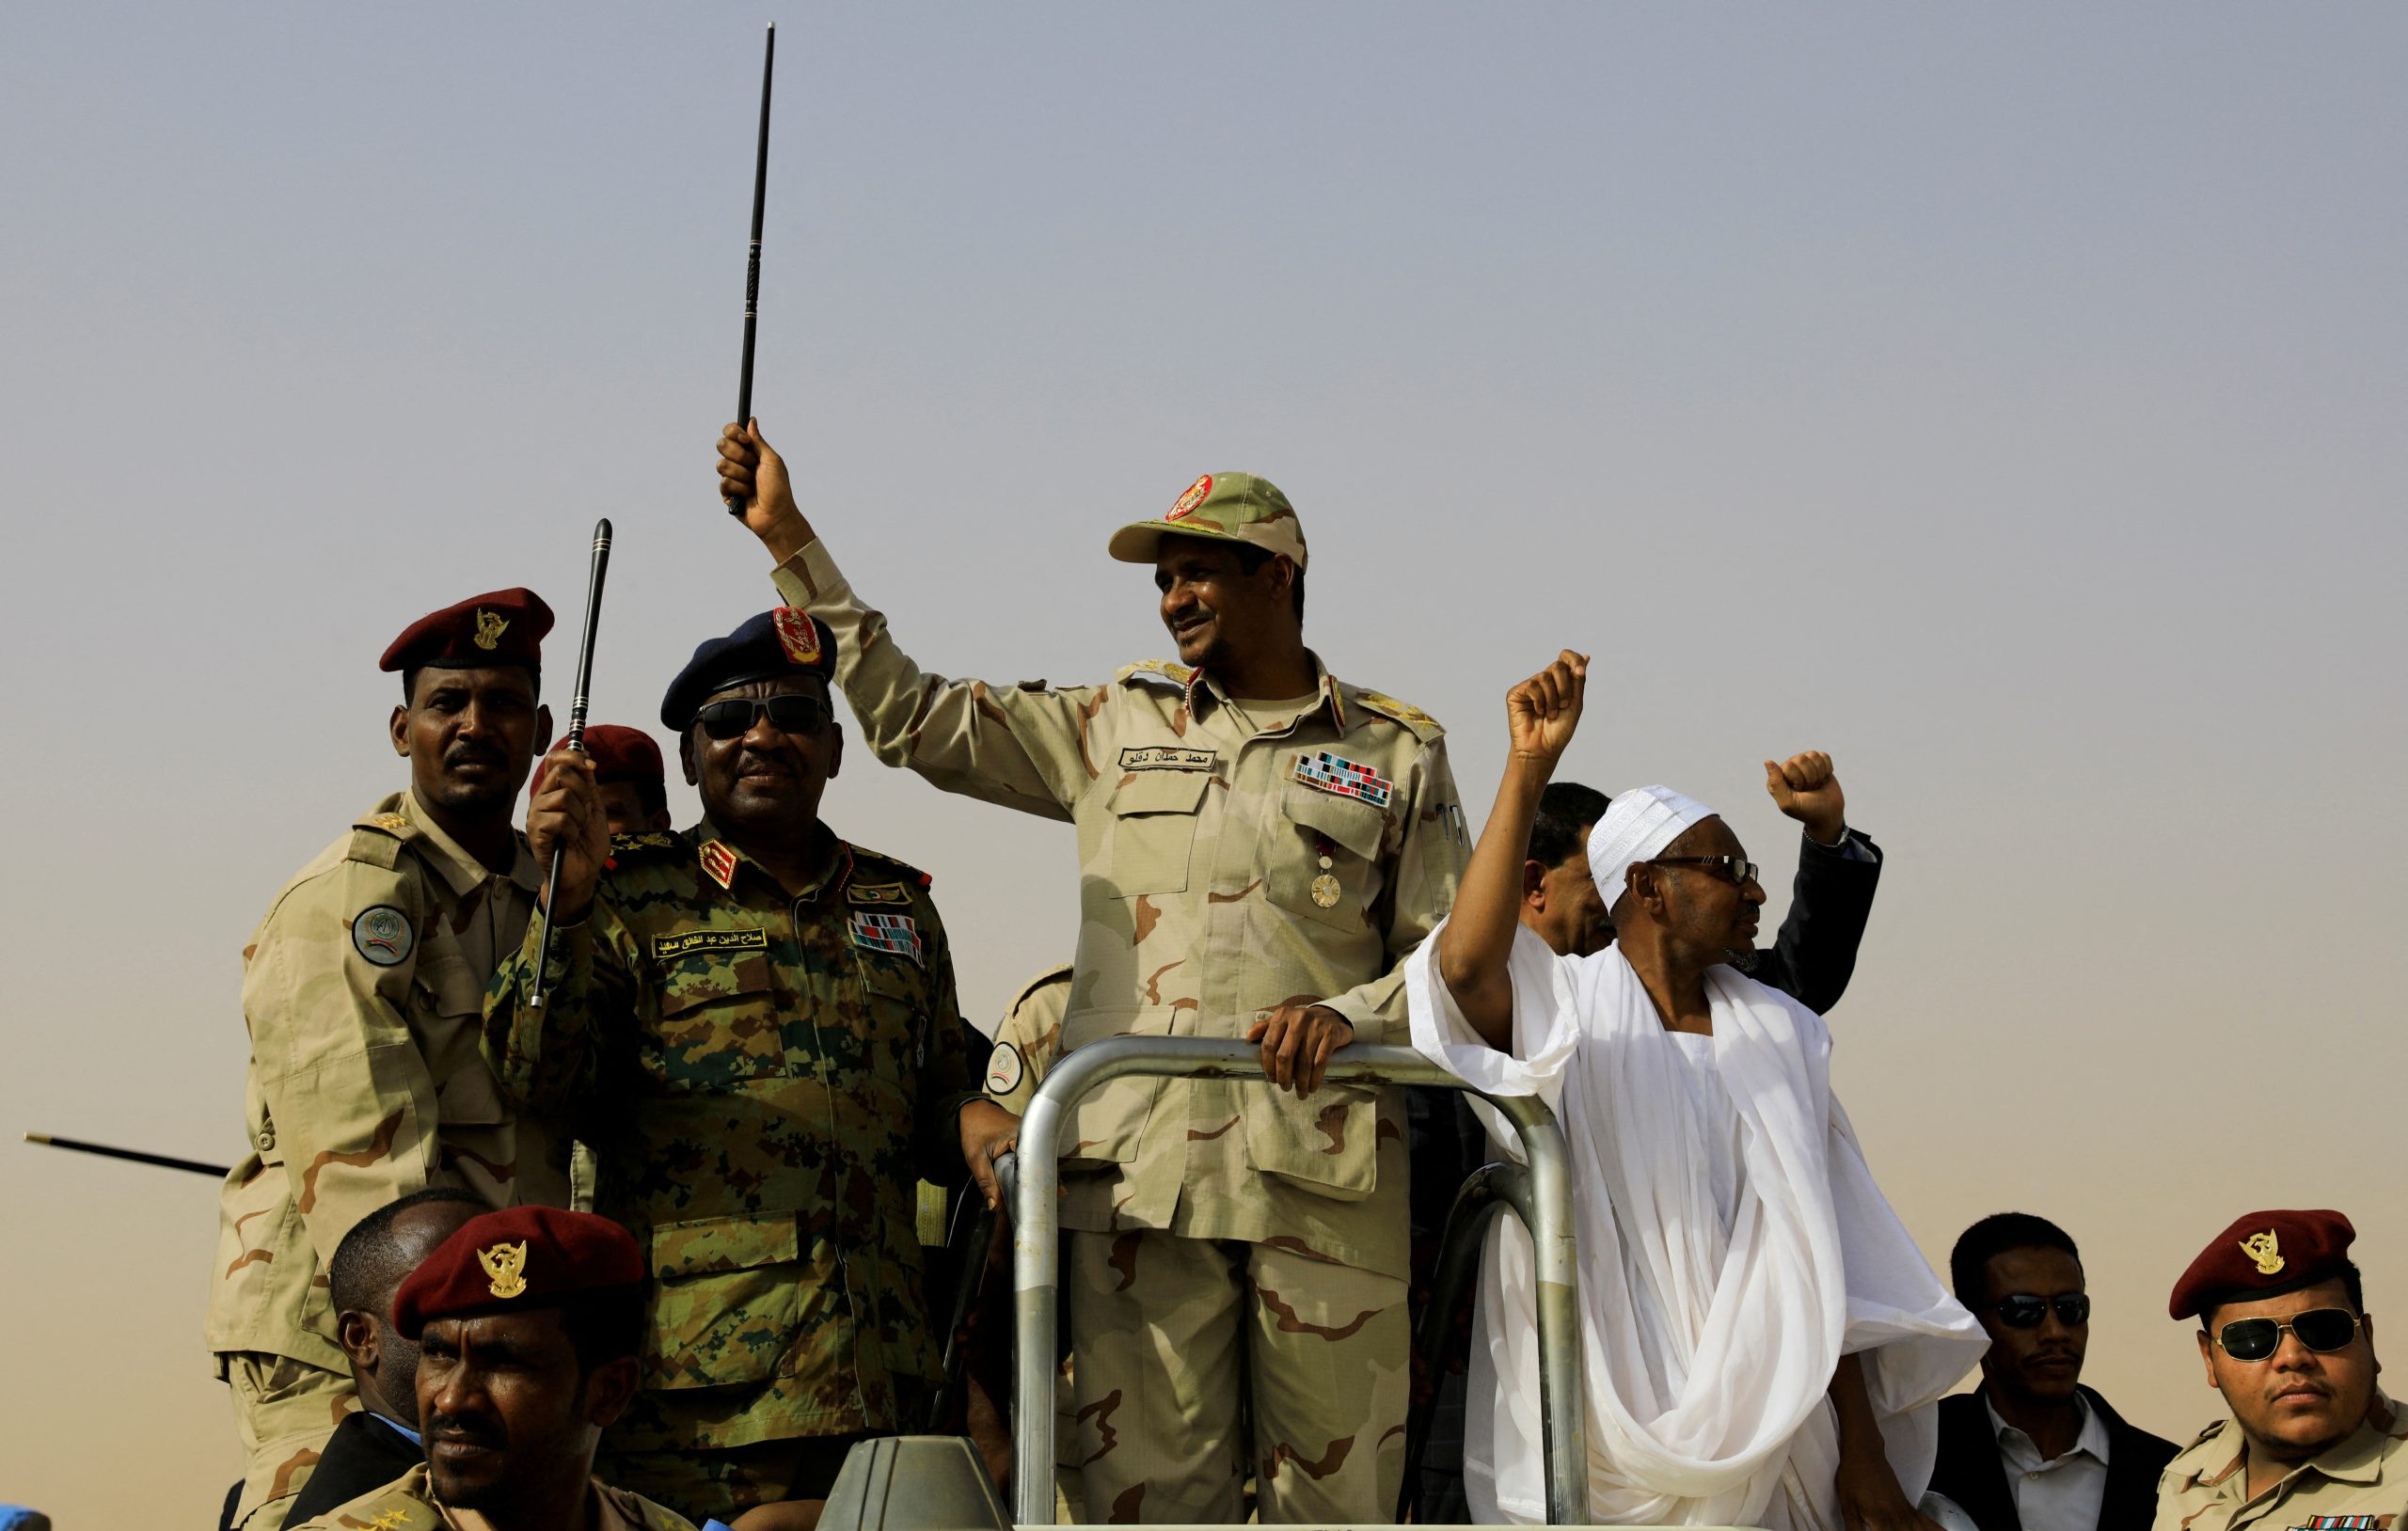 Suspicious network’s copypasta replies to Sudanese paramilitary group’s tweets